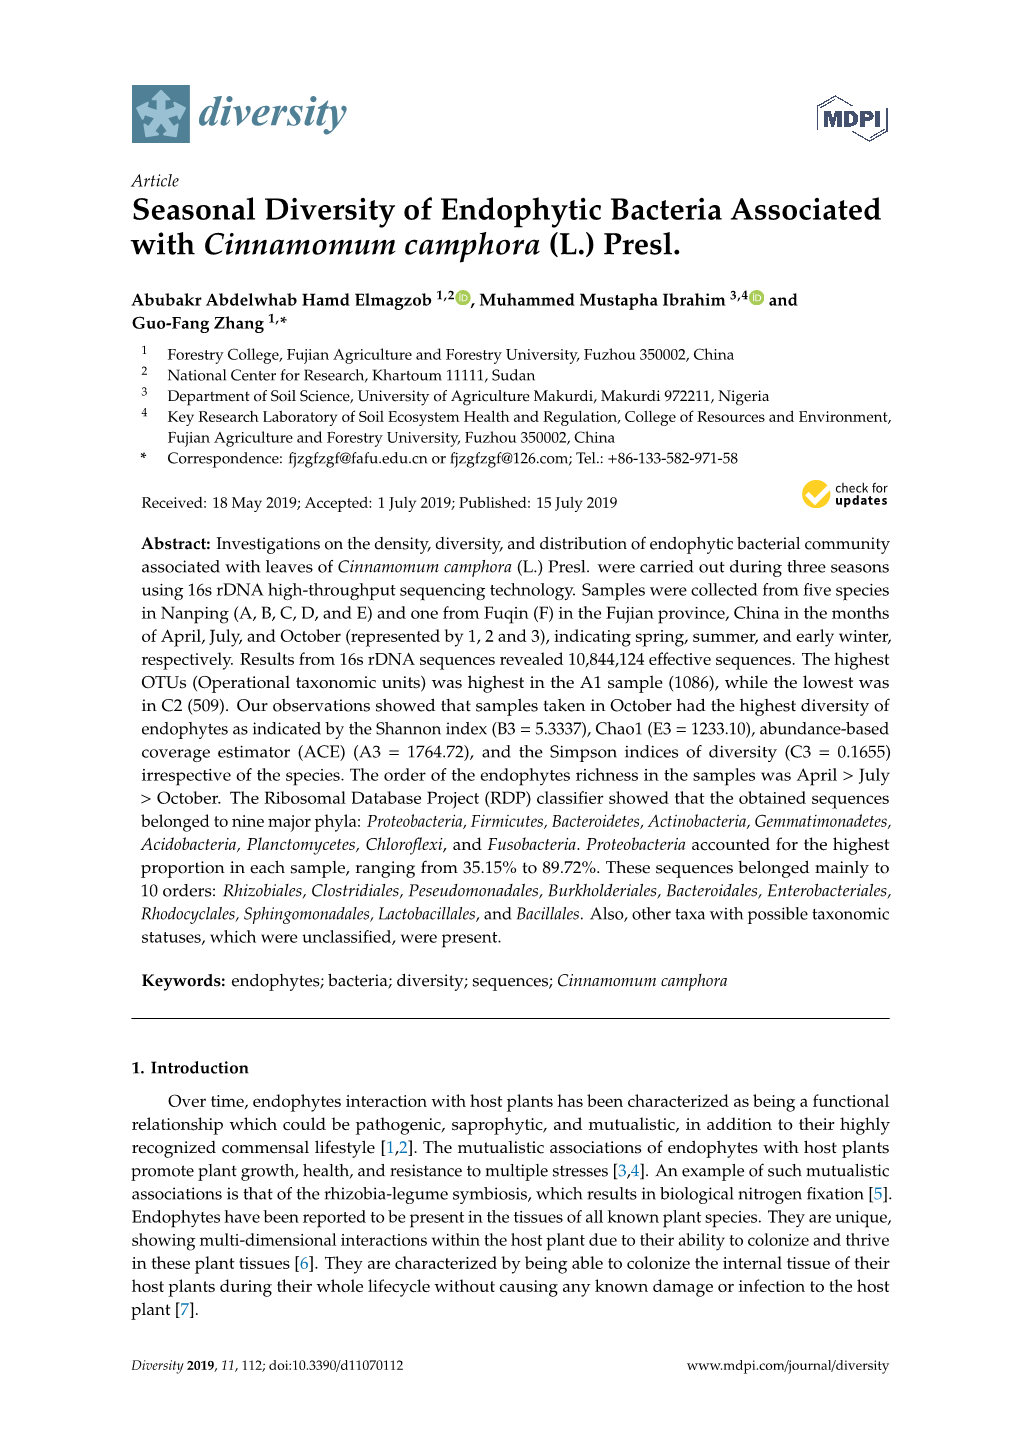 Seasonal Diversity of Endophytic Bacteria Associated with Cinnamomum Camphora (L.) Presl